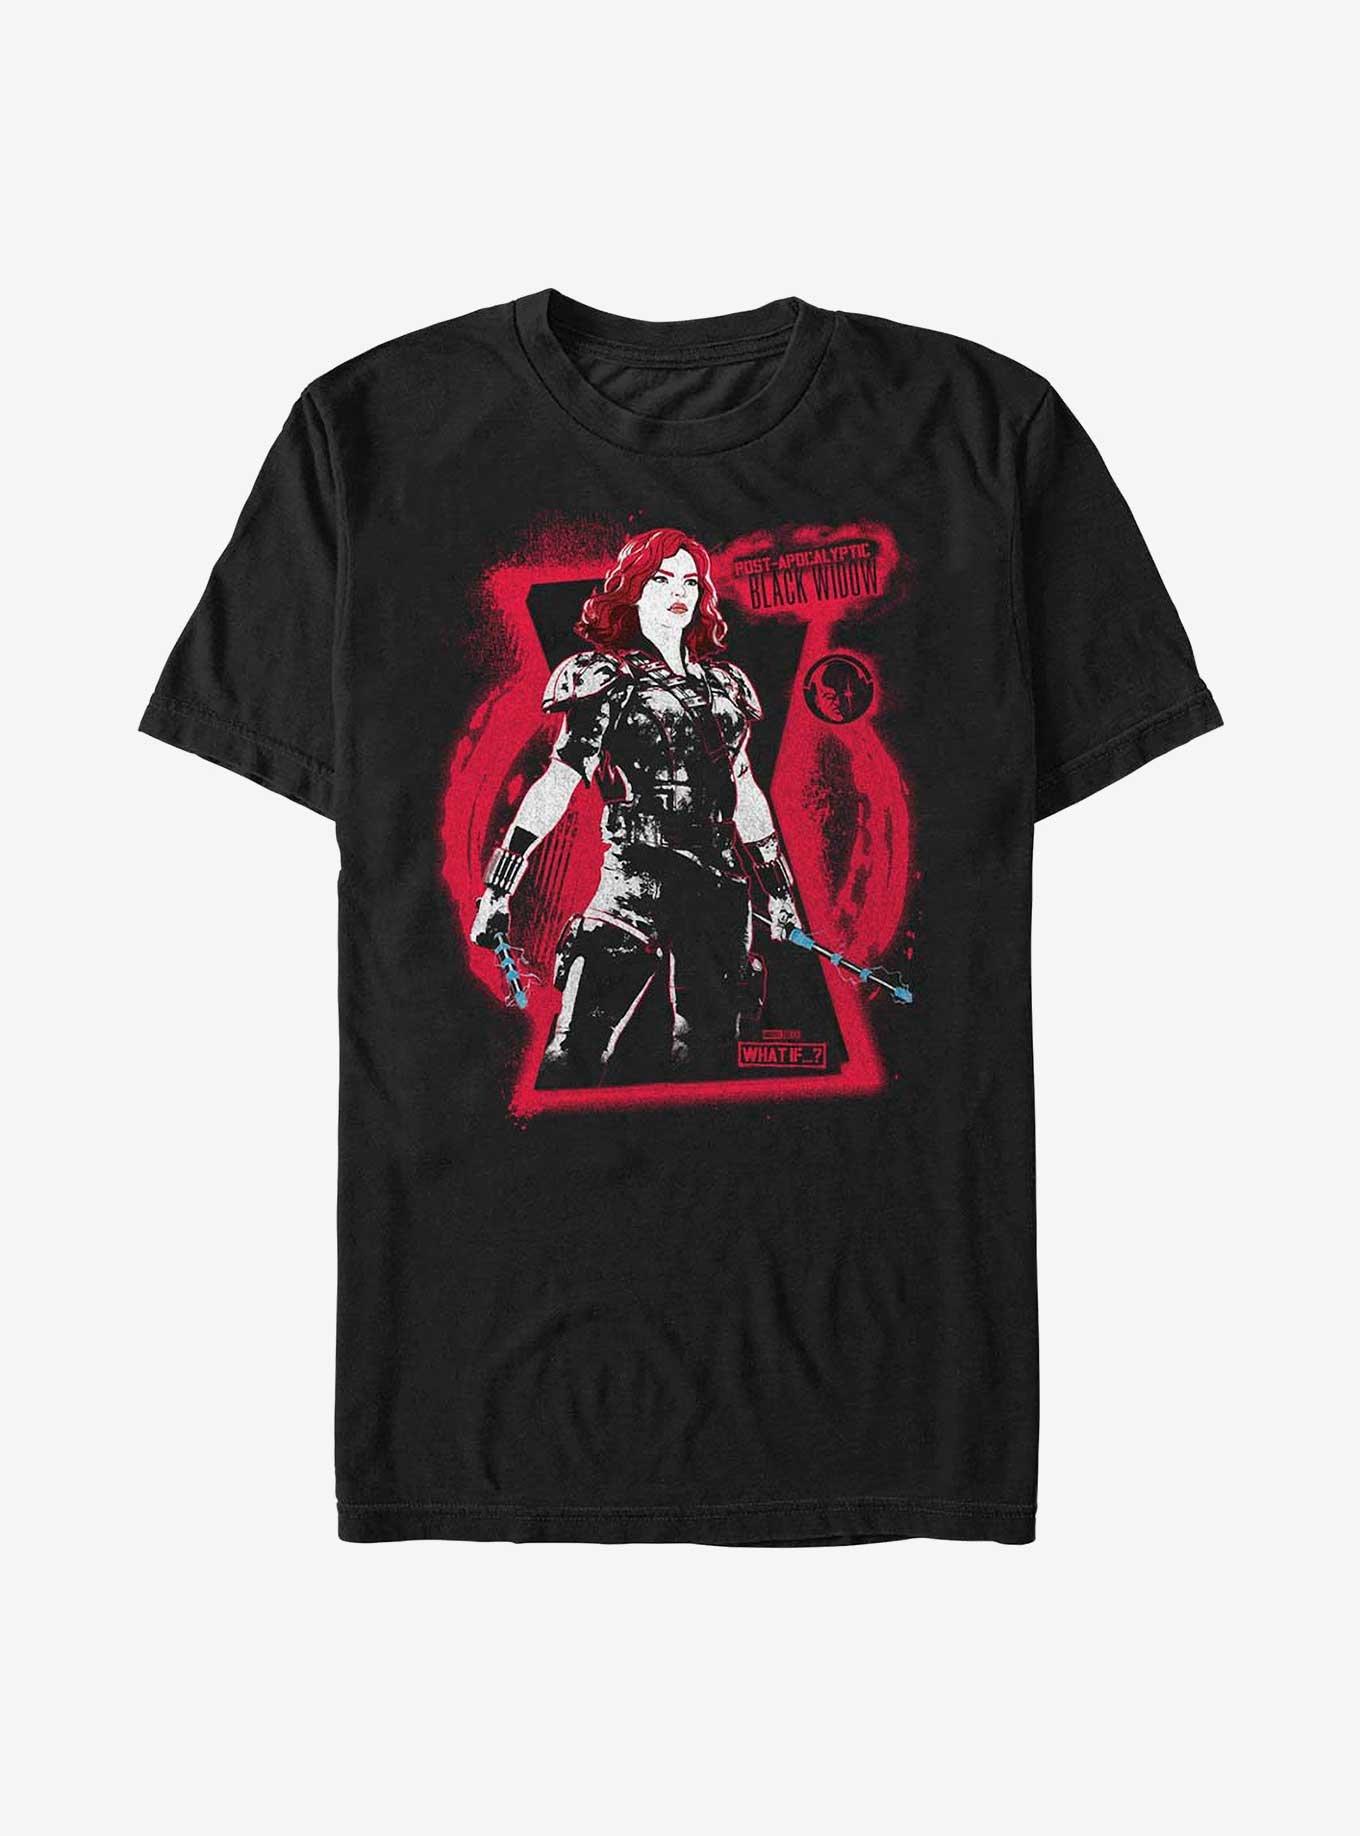 Marvel What If?? Black Widow Post Apocalypse Ready T-Shirt